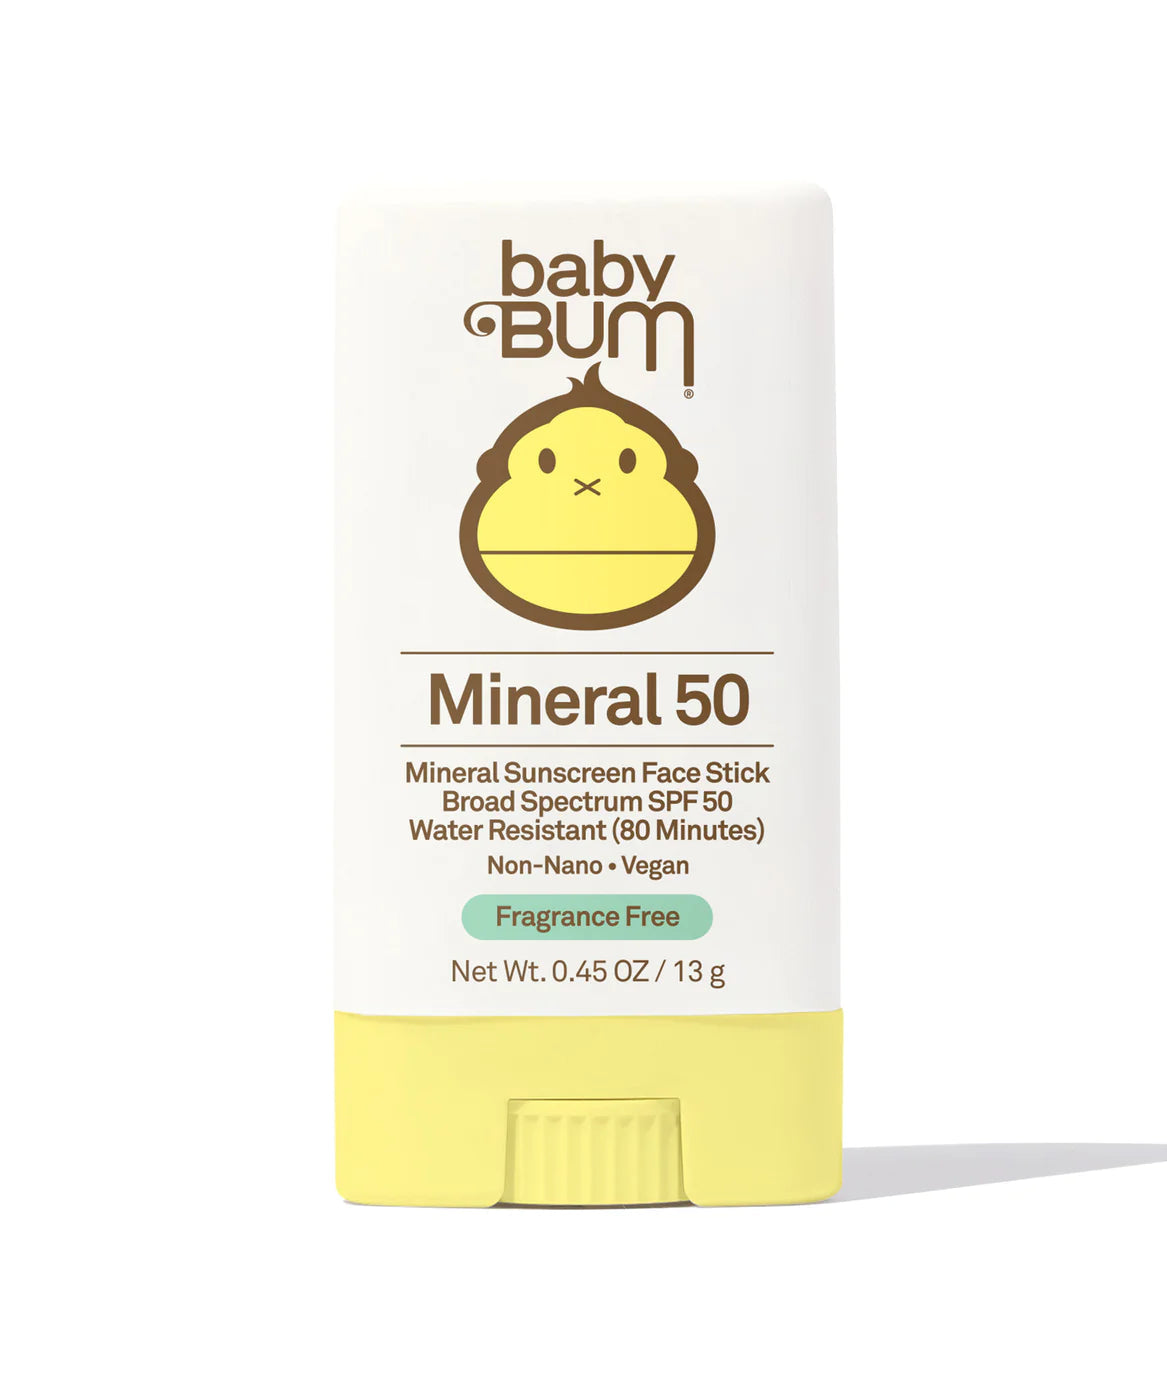 SUN BUM Baby Bum Mineral SPF 50 Sunscreen Face Stick Fragrance Free Sunscreen Sun Bum 